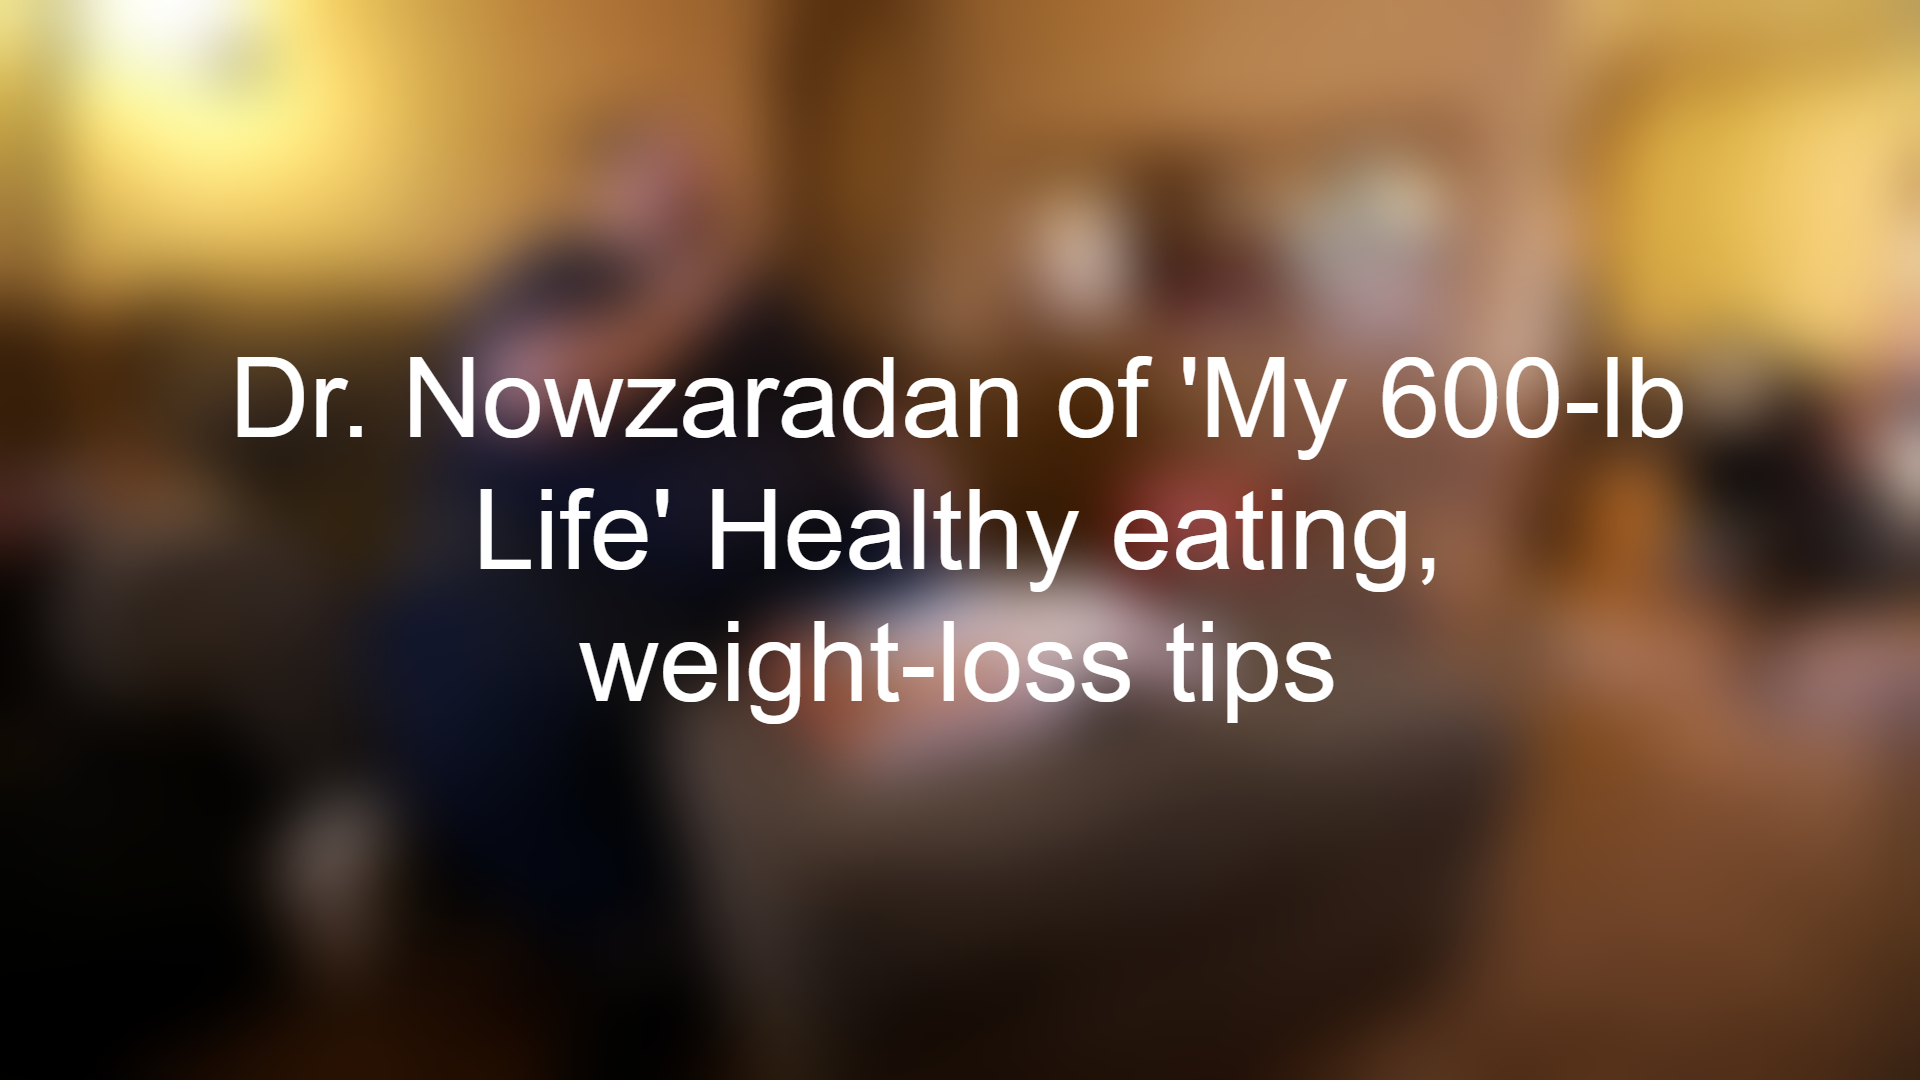 Meet TLC's 'My 600-lb Life' Dr. Nowzaradan at book signing event